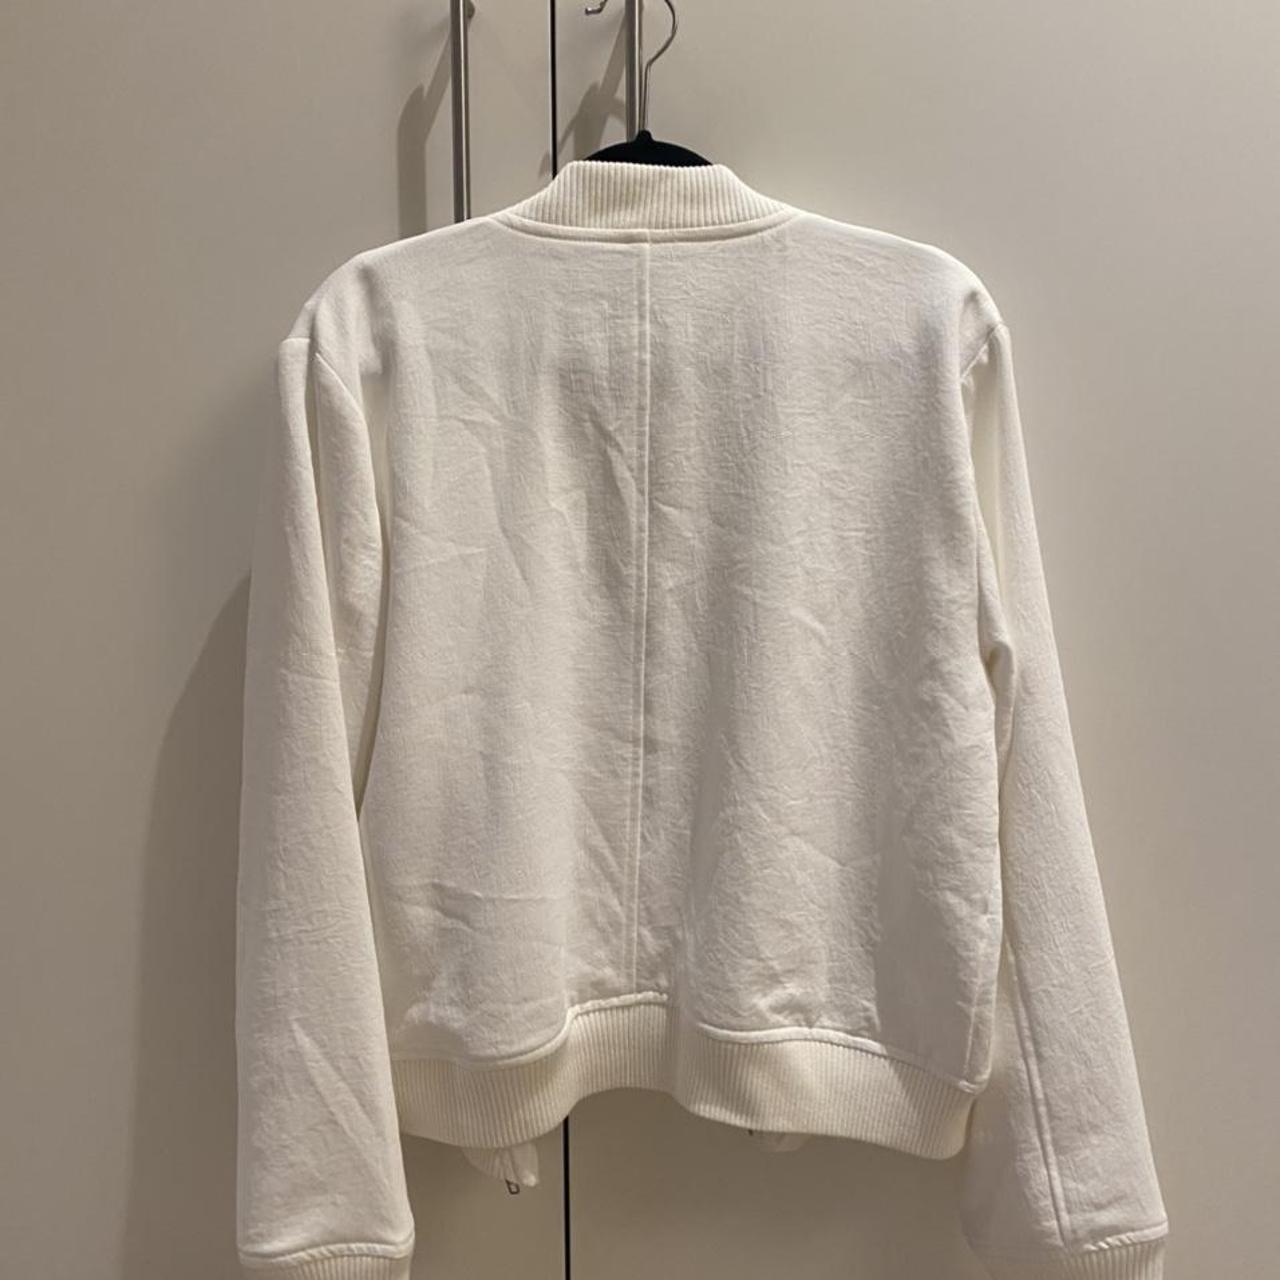 Kookai White bomber jacket - Depop